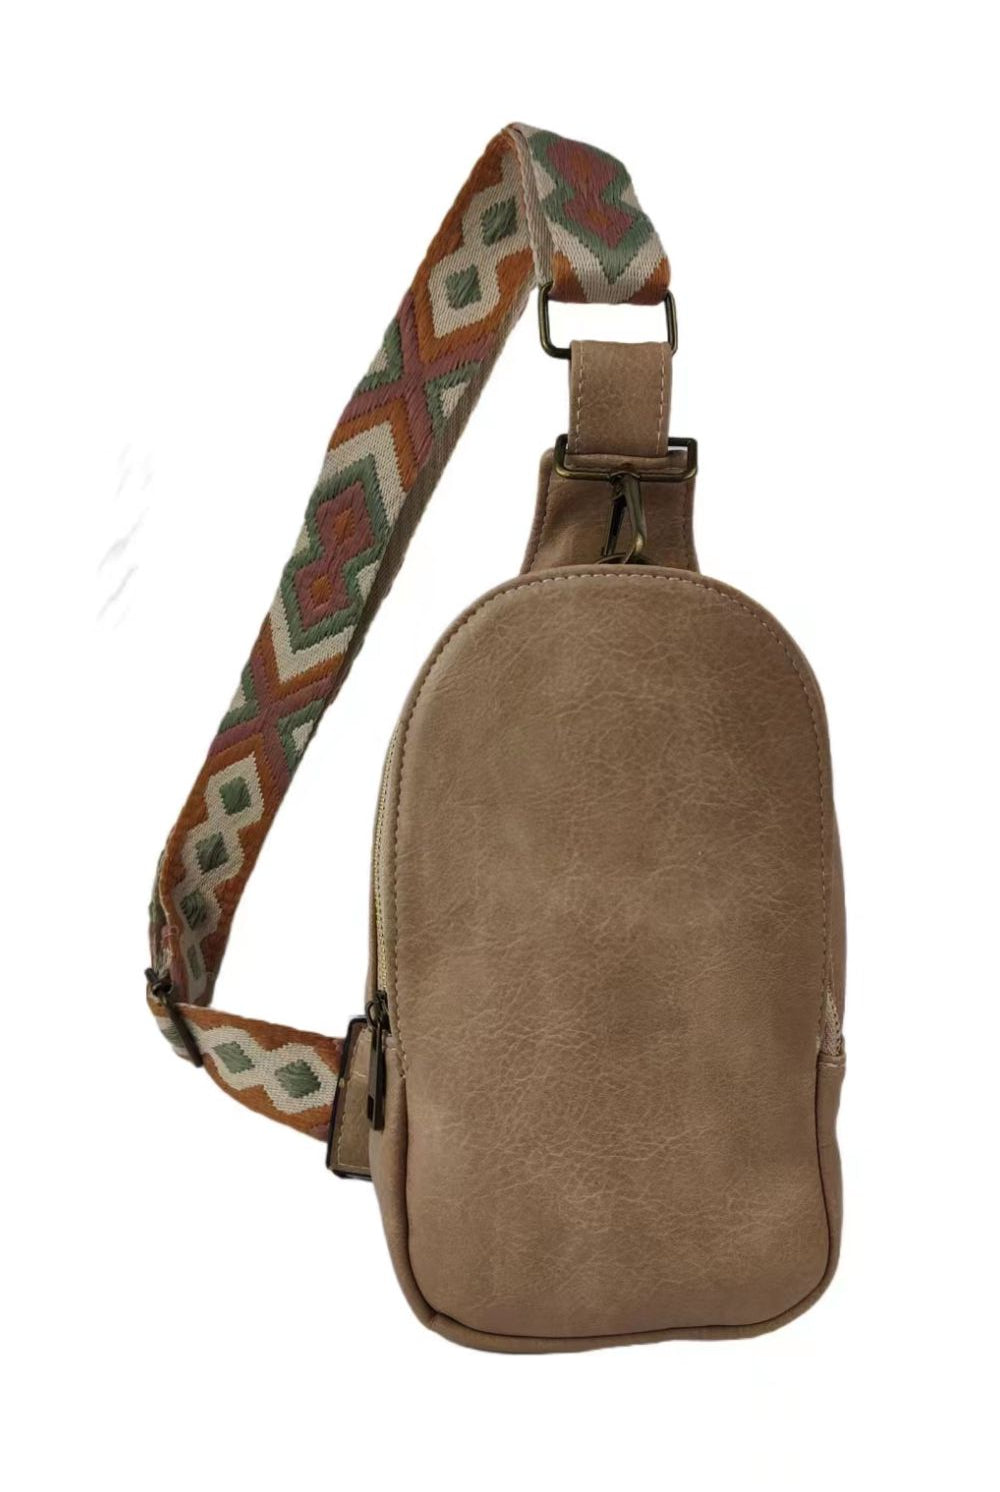 Dim Gray Random Pattern Adjustable Strap PU Leather Sling Bag Handbags